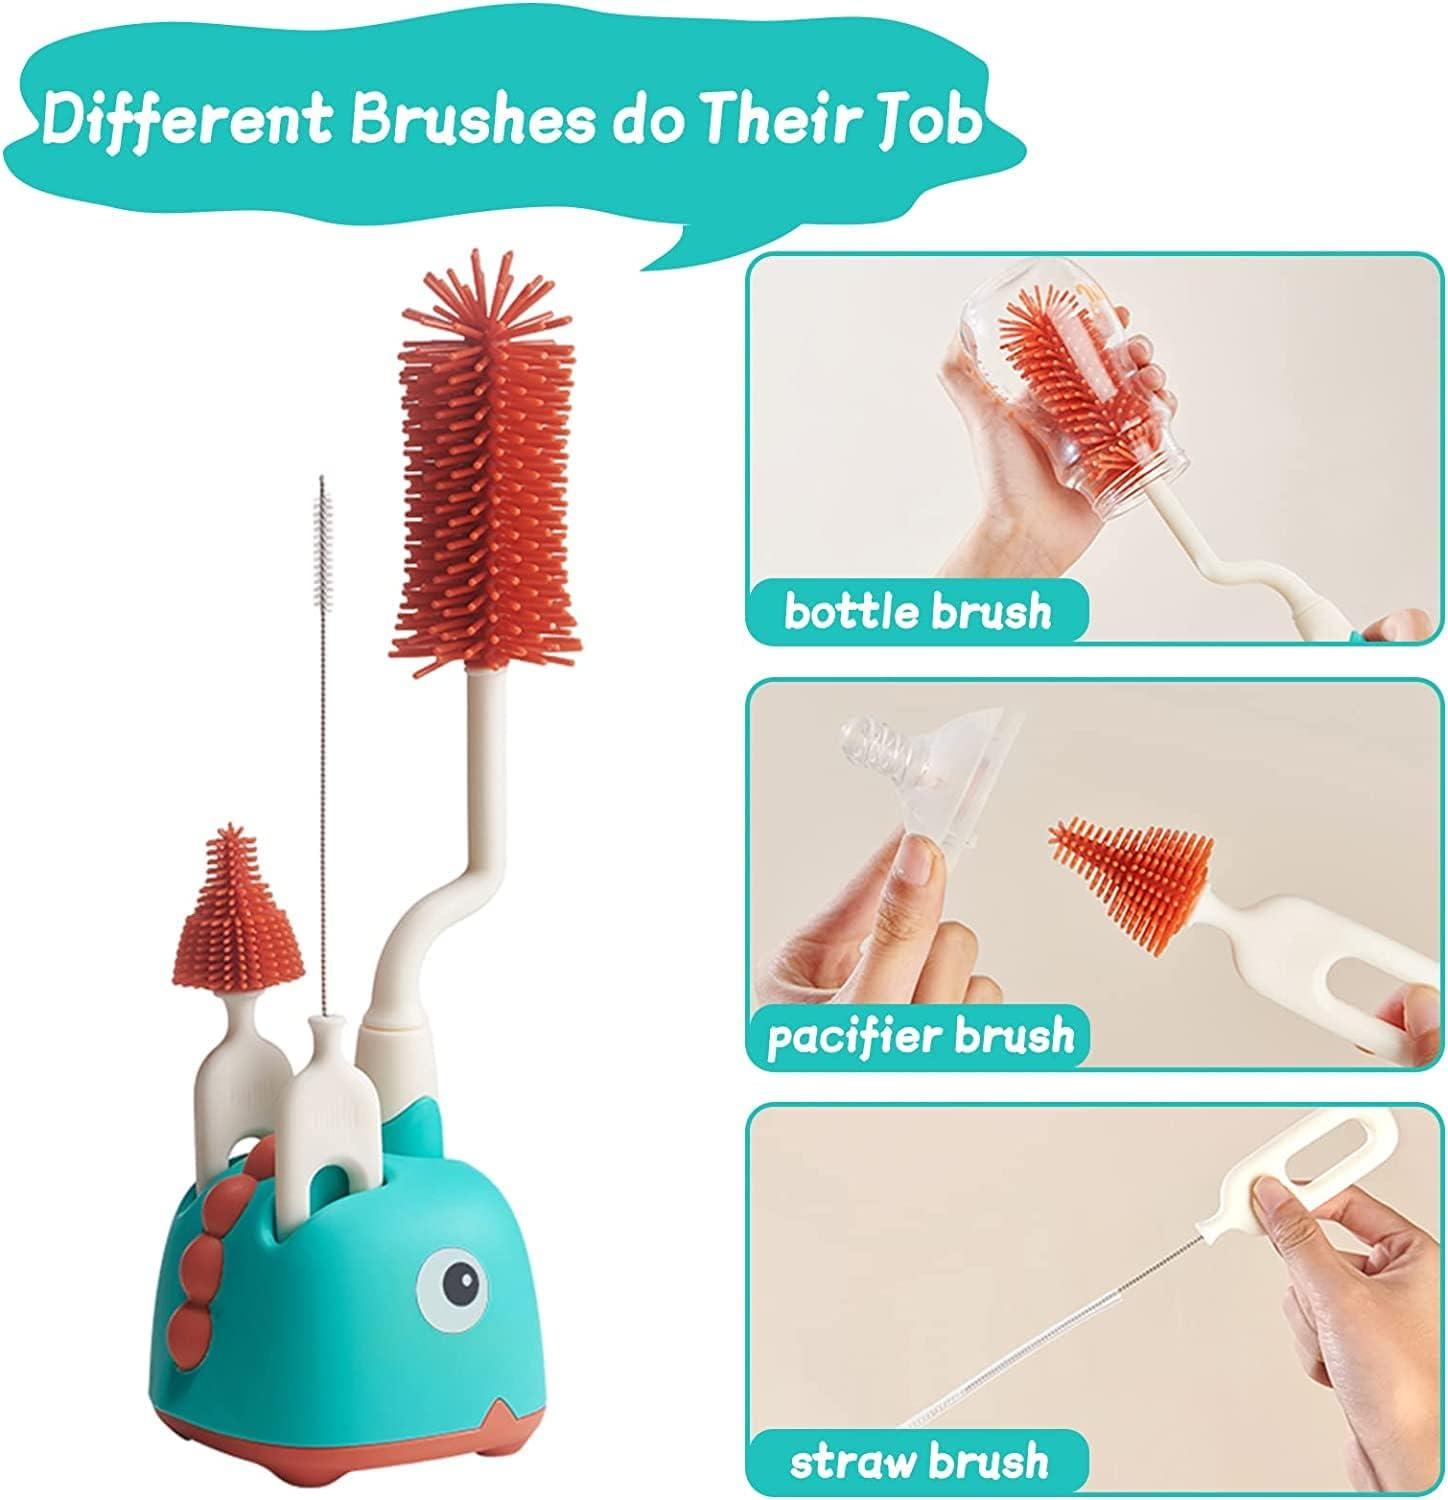 Baby Bottle Brush, 3 in 1 Rotating Silicone Bottle Cleaning Brush -  Rotating Grand Kitchen Cleaning Brush